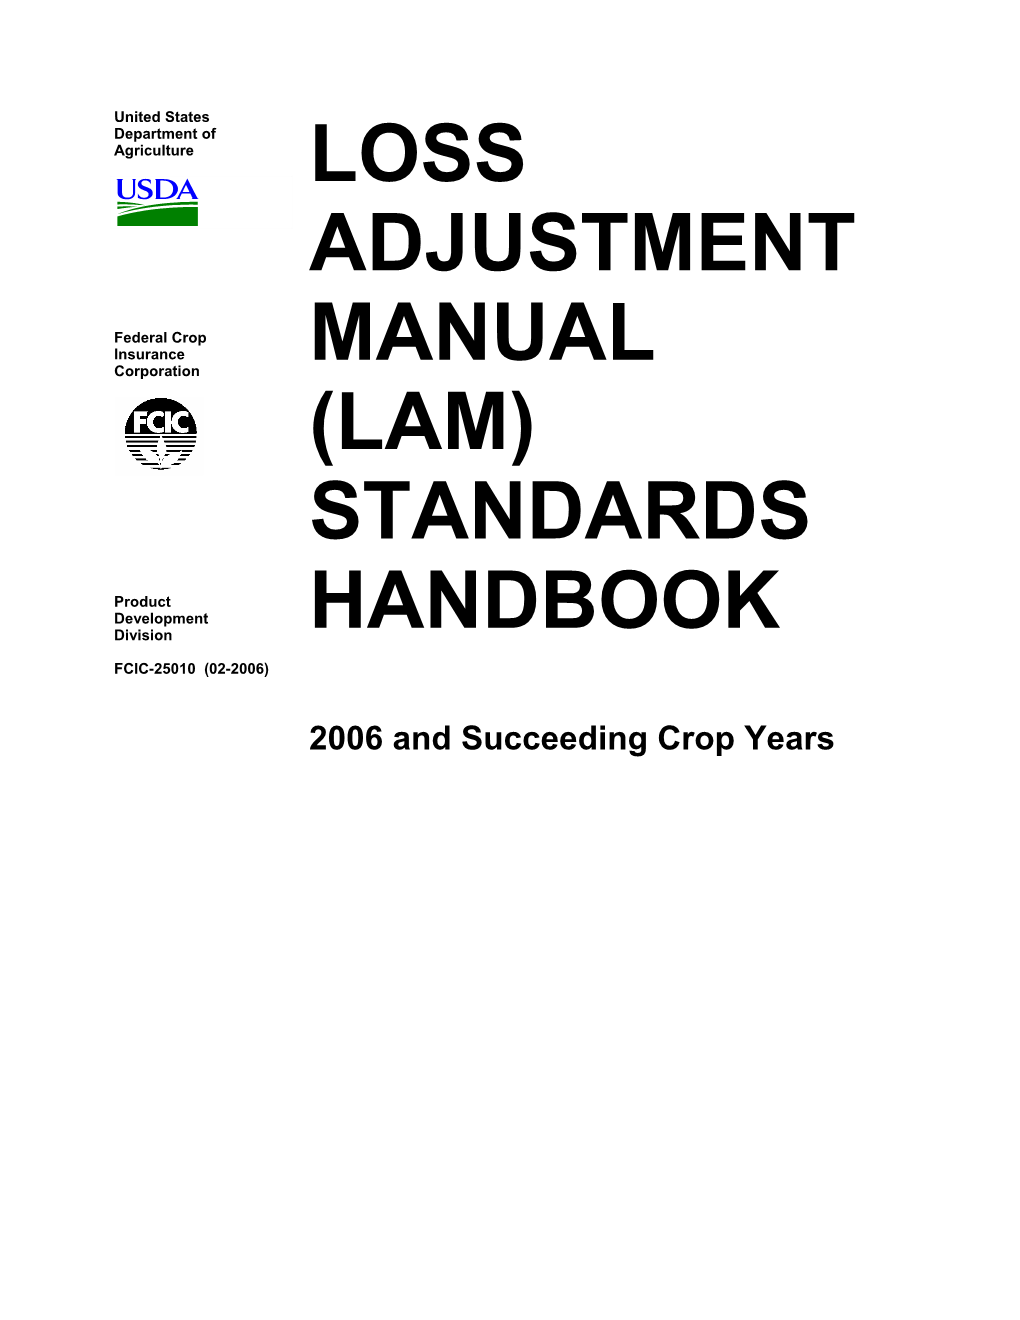 Loss Adjustment Manual (Lam) Standards Handbook